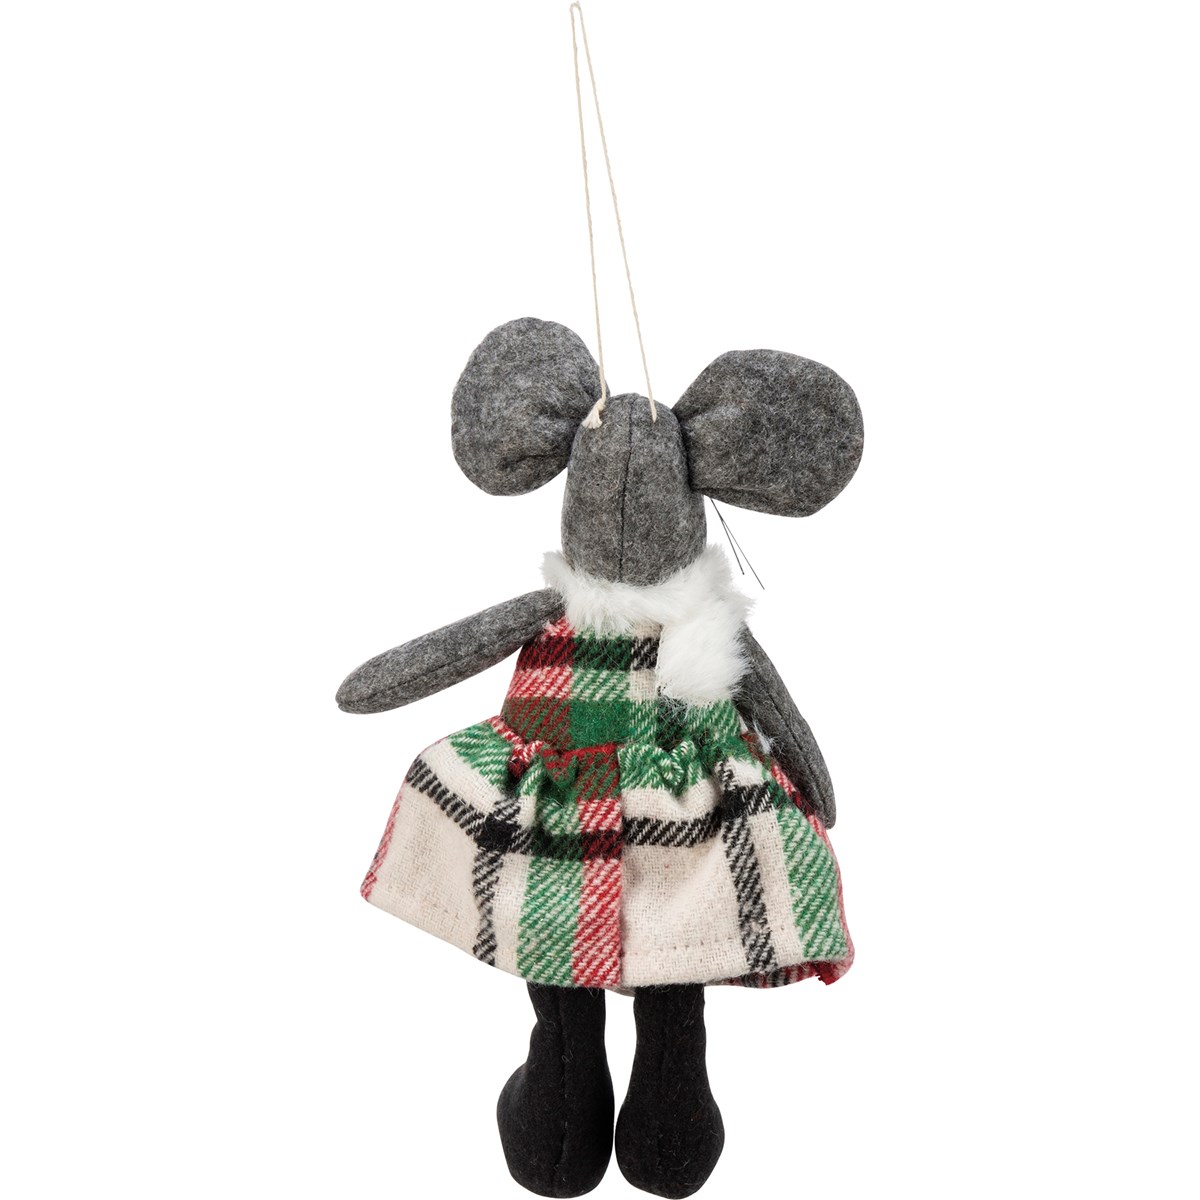 Mouse Couple Ornament Set - Polyester, Plastic